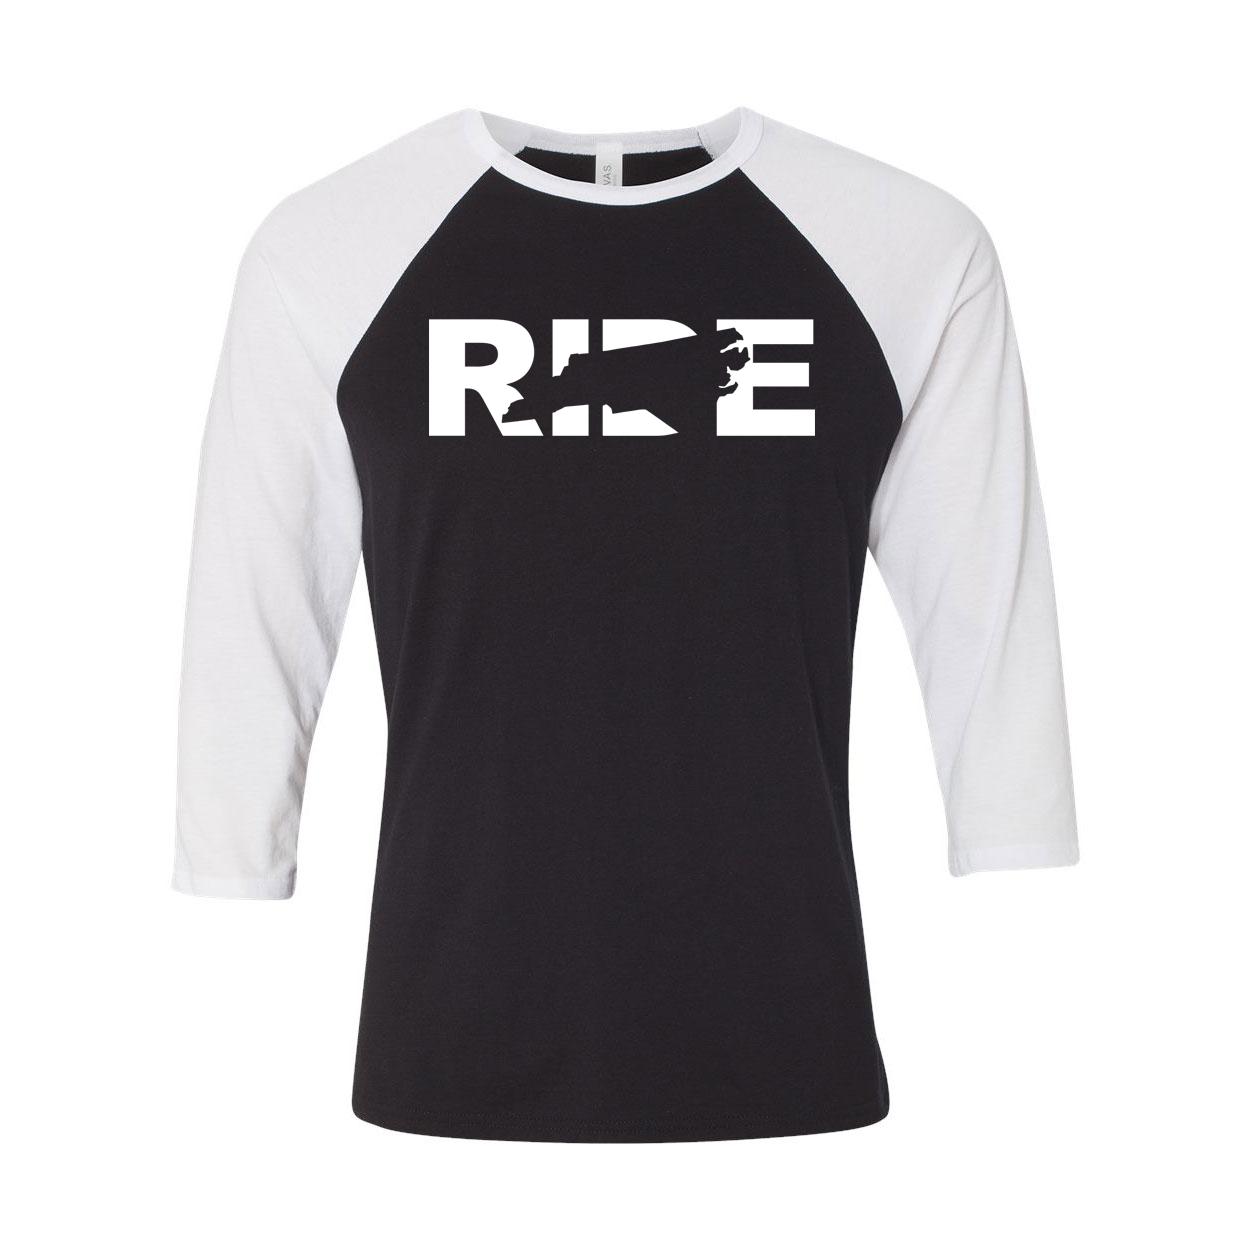 Ride North Carolina Classic Raglan Shirt Black/White (White Logo)